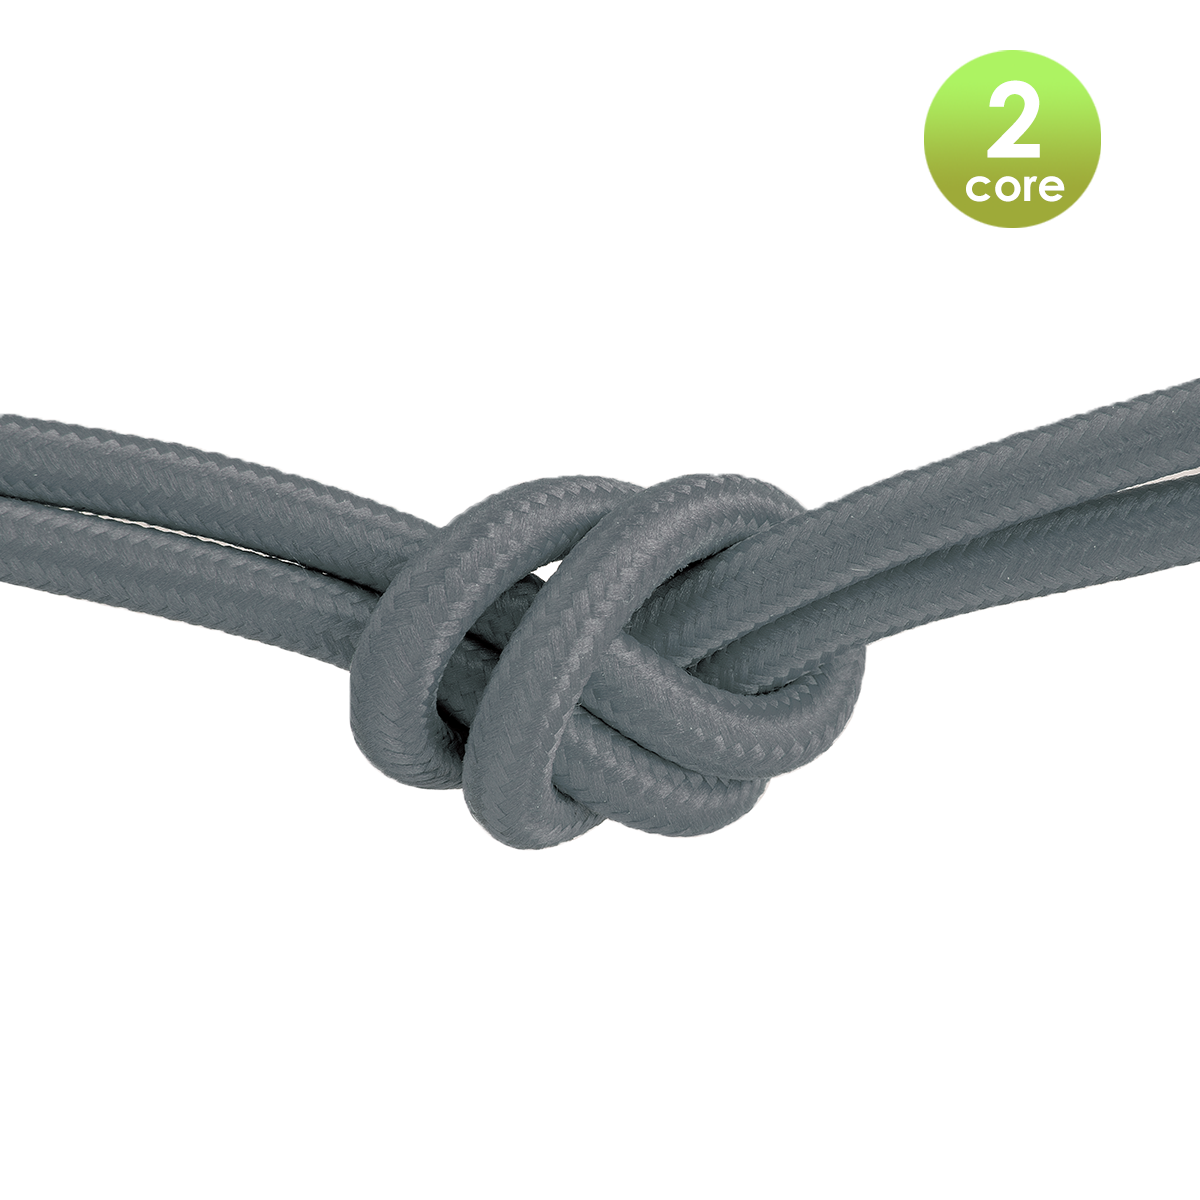 Tangla lighting - TLCB01006BW - Fabric cable 2 core - in medium green spring